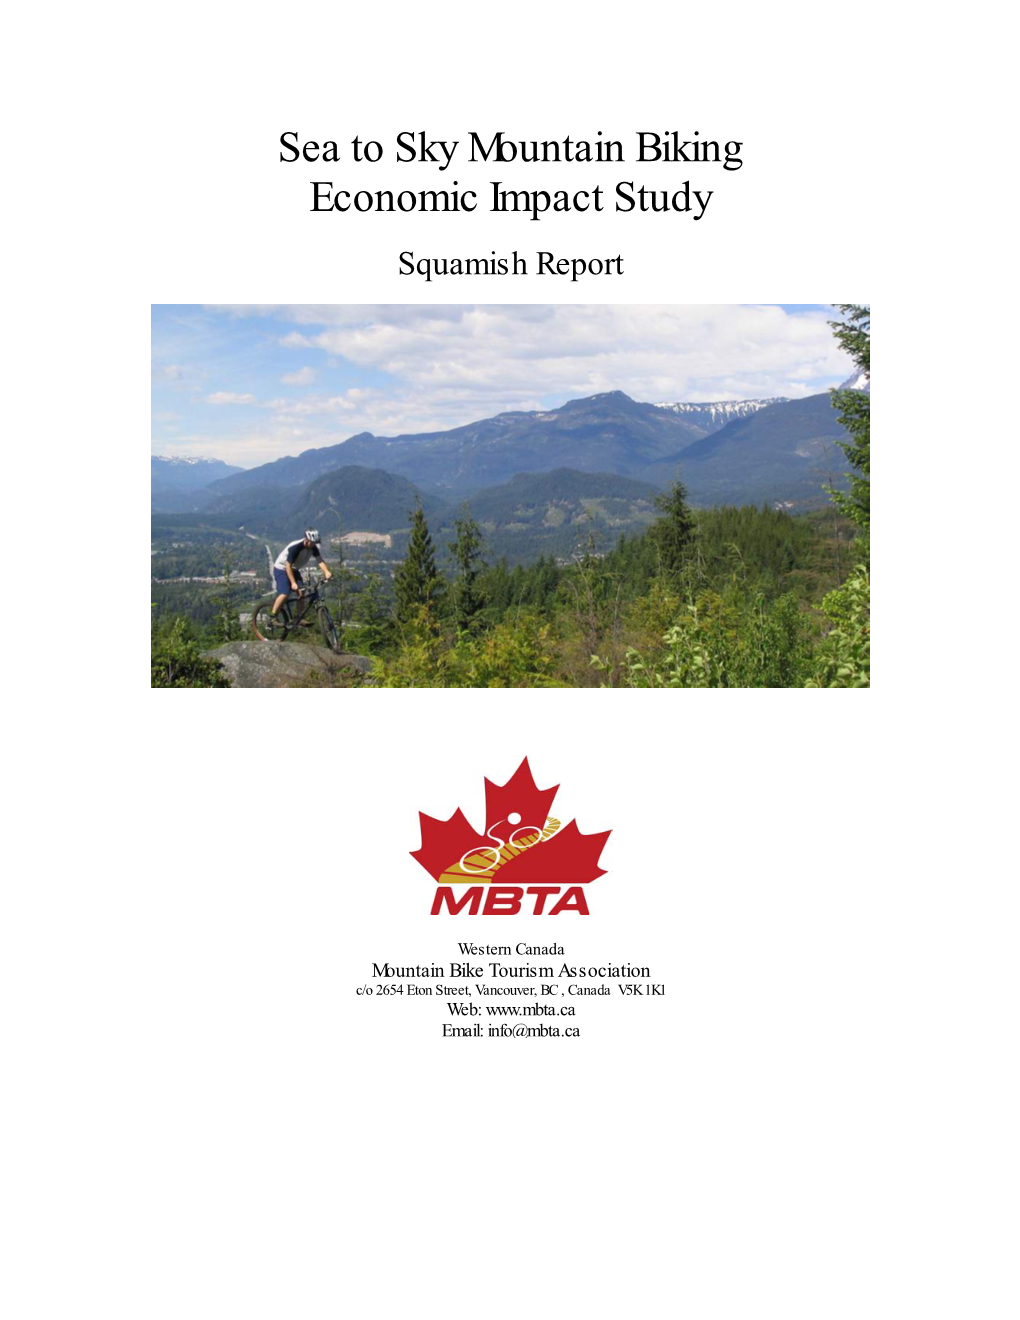 Sea to Sky Mountain Biking Economic Impact Study Squamish Report